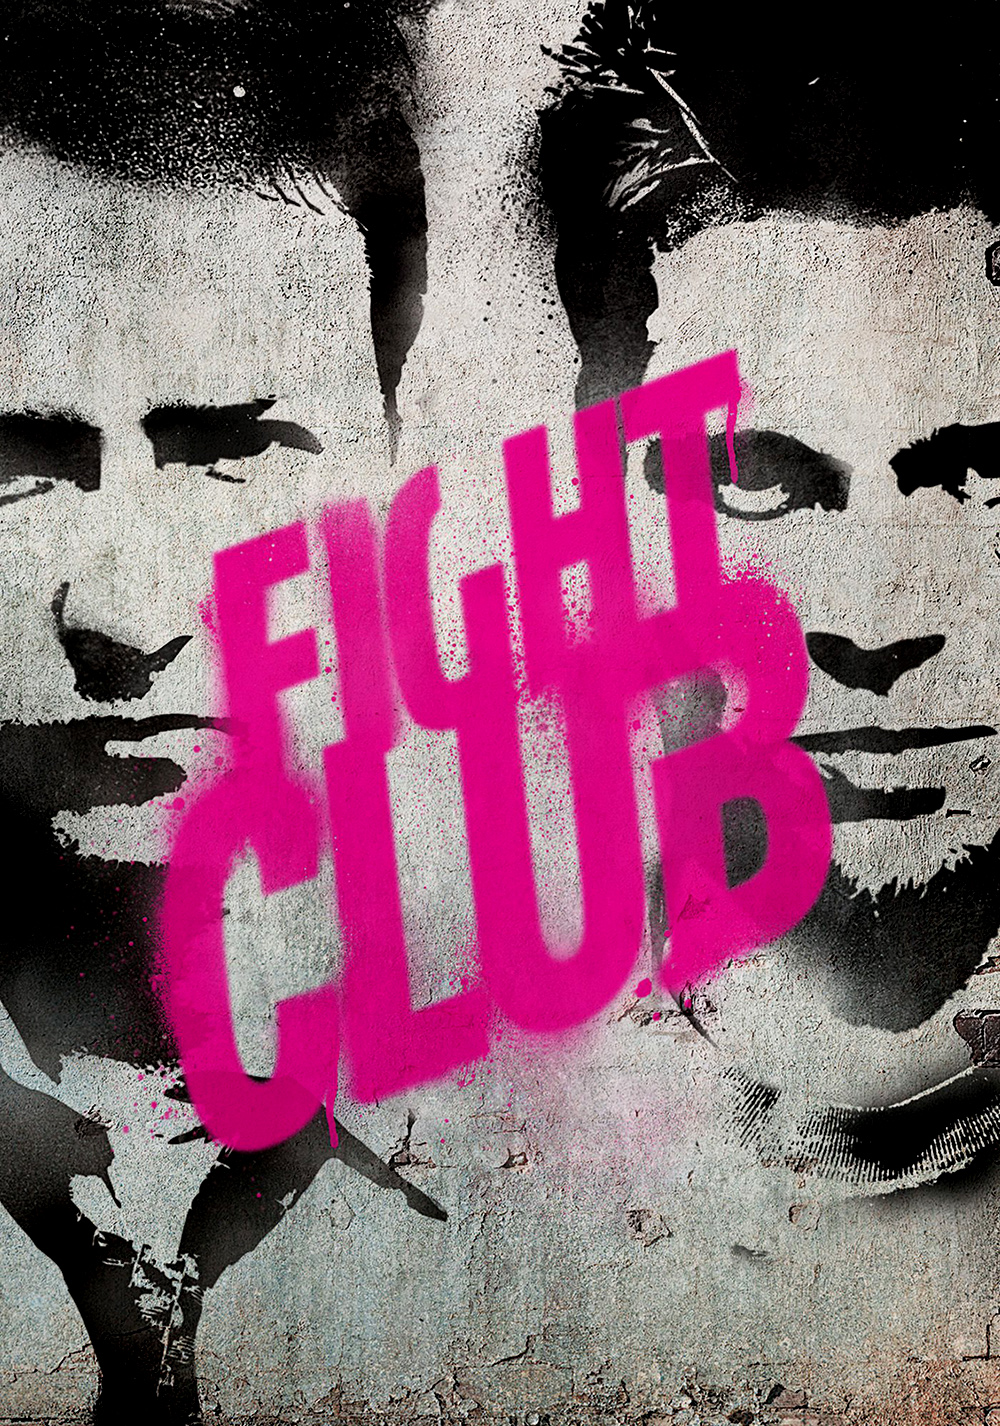 Stiahni si HD Filmy Klub rvacu / Fight Club (1999)(CZ/EN)[720pHD] = CSFD 88%